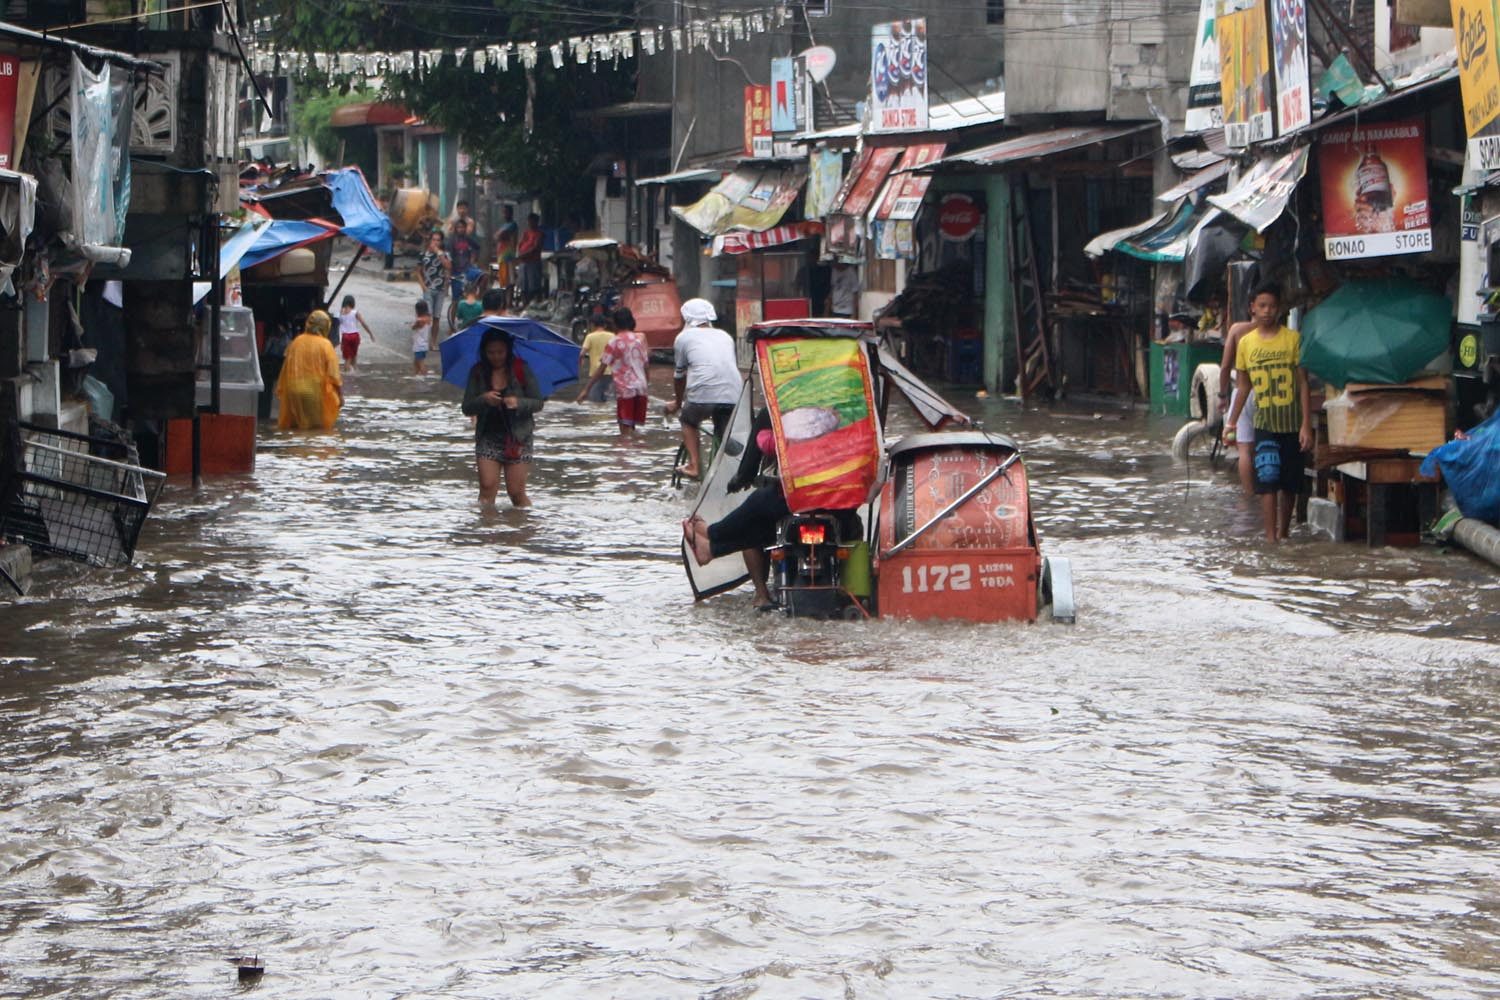 SOUTHWEST MONSOON. Monsoon rain causes floods in Quezon City on July 27, 2017. File photo by Darren Langit/Rappler  